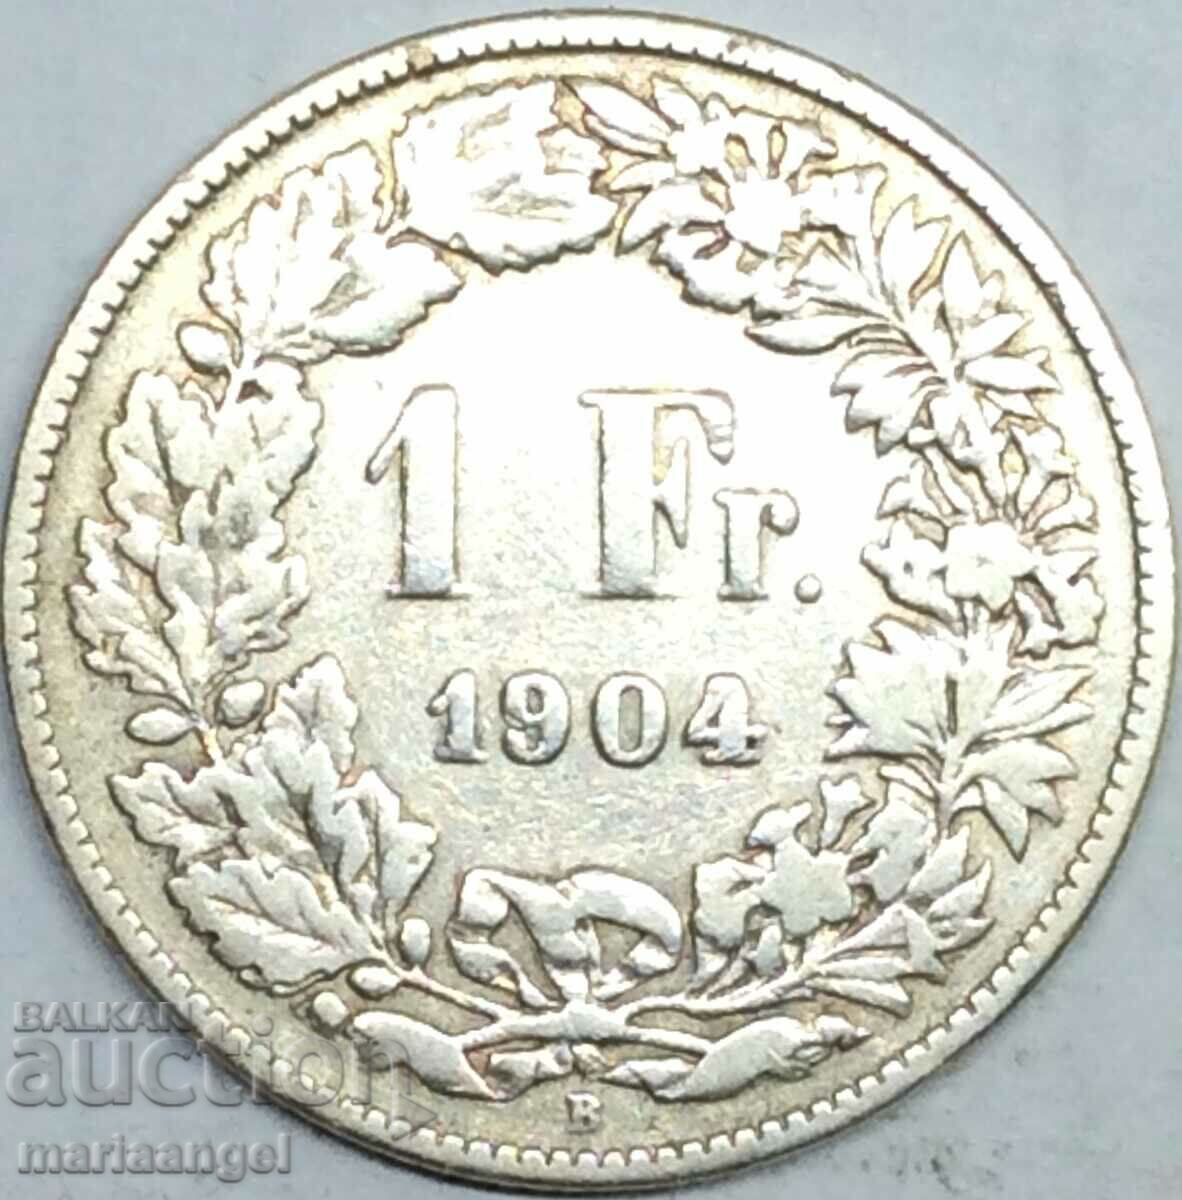 Switzerland 1 franc 1904 B - canton Bern silver - rare year